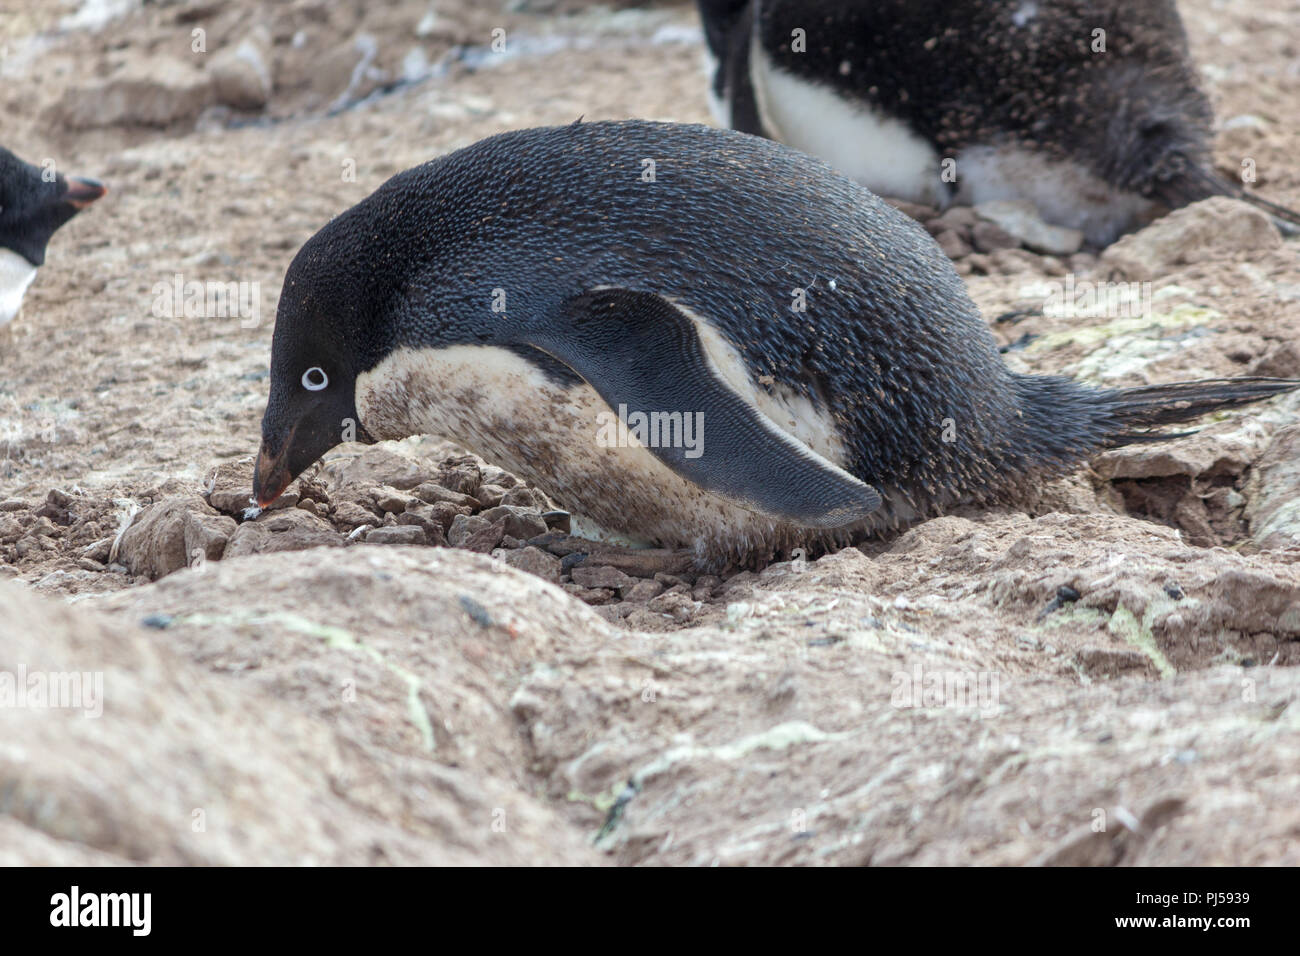 Adelie penguin de nidification. Shirley island, Antarctica Banque D'Images